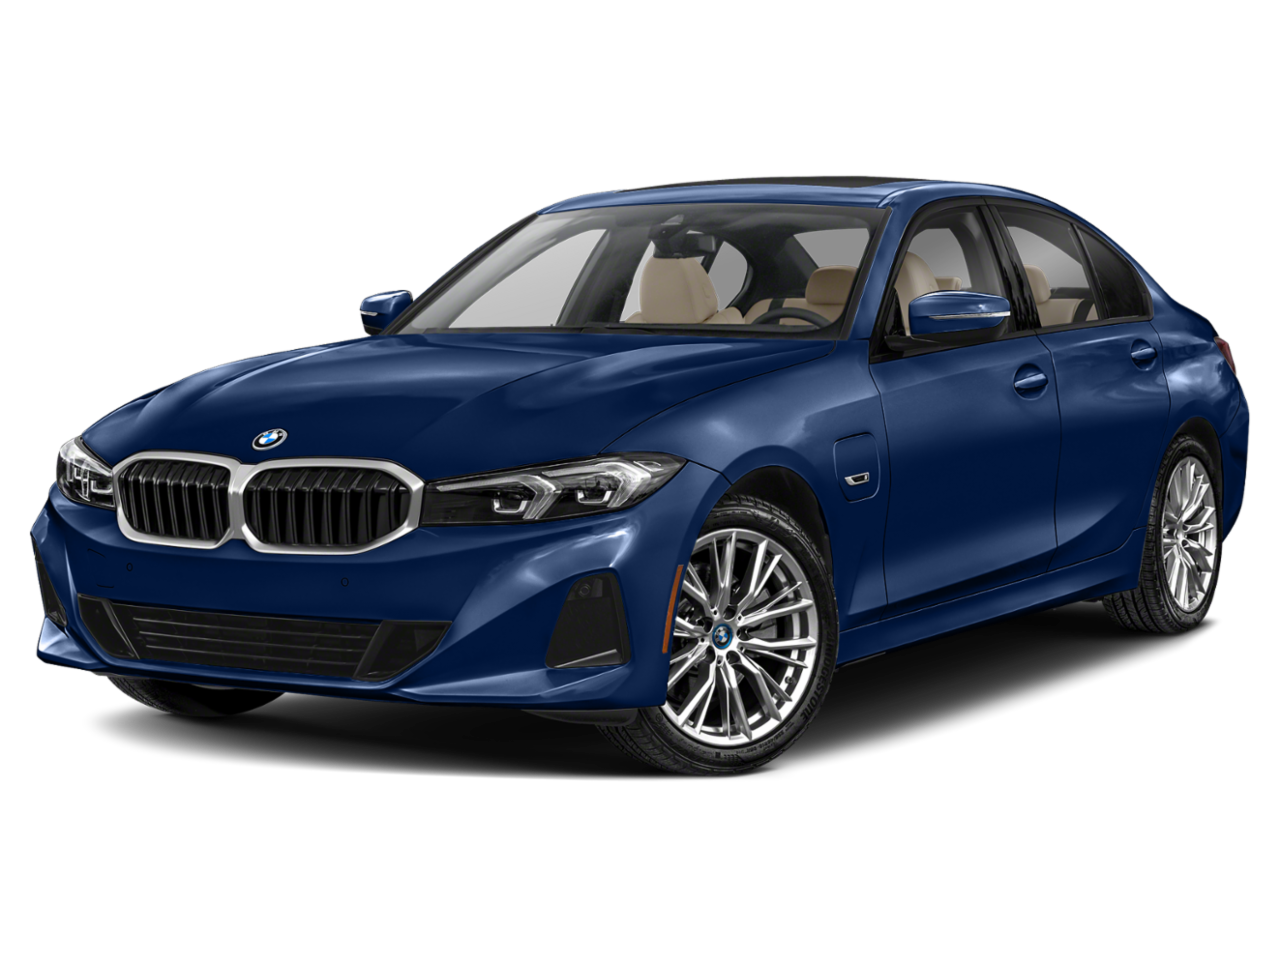 New BMW Offers BMW Deals & Specials